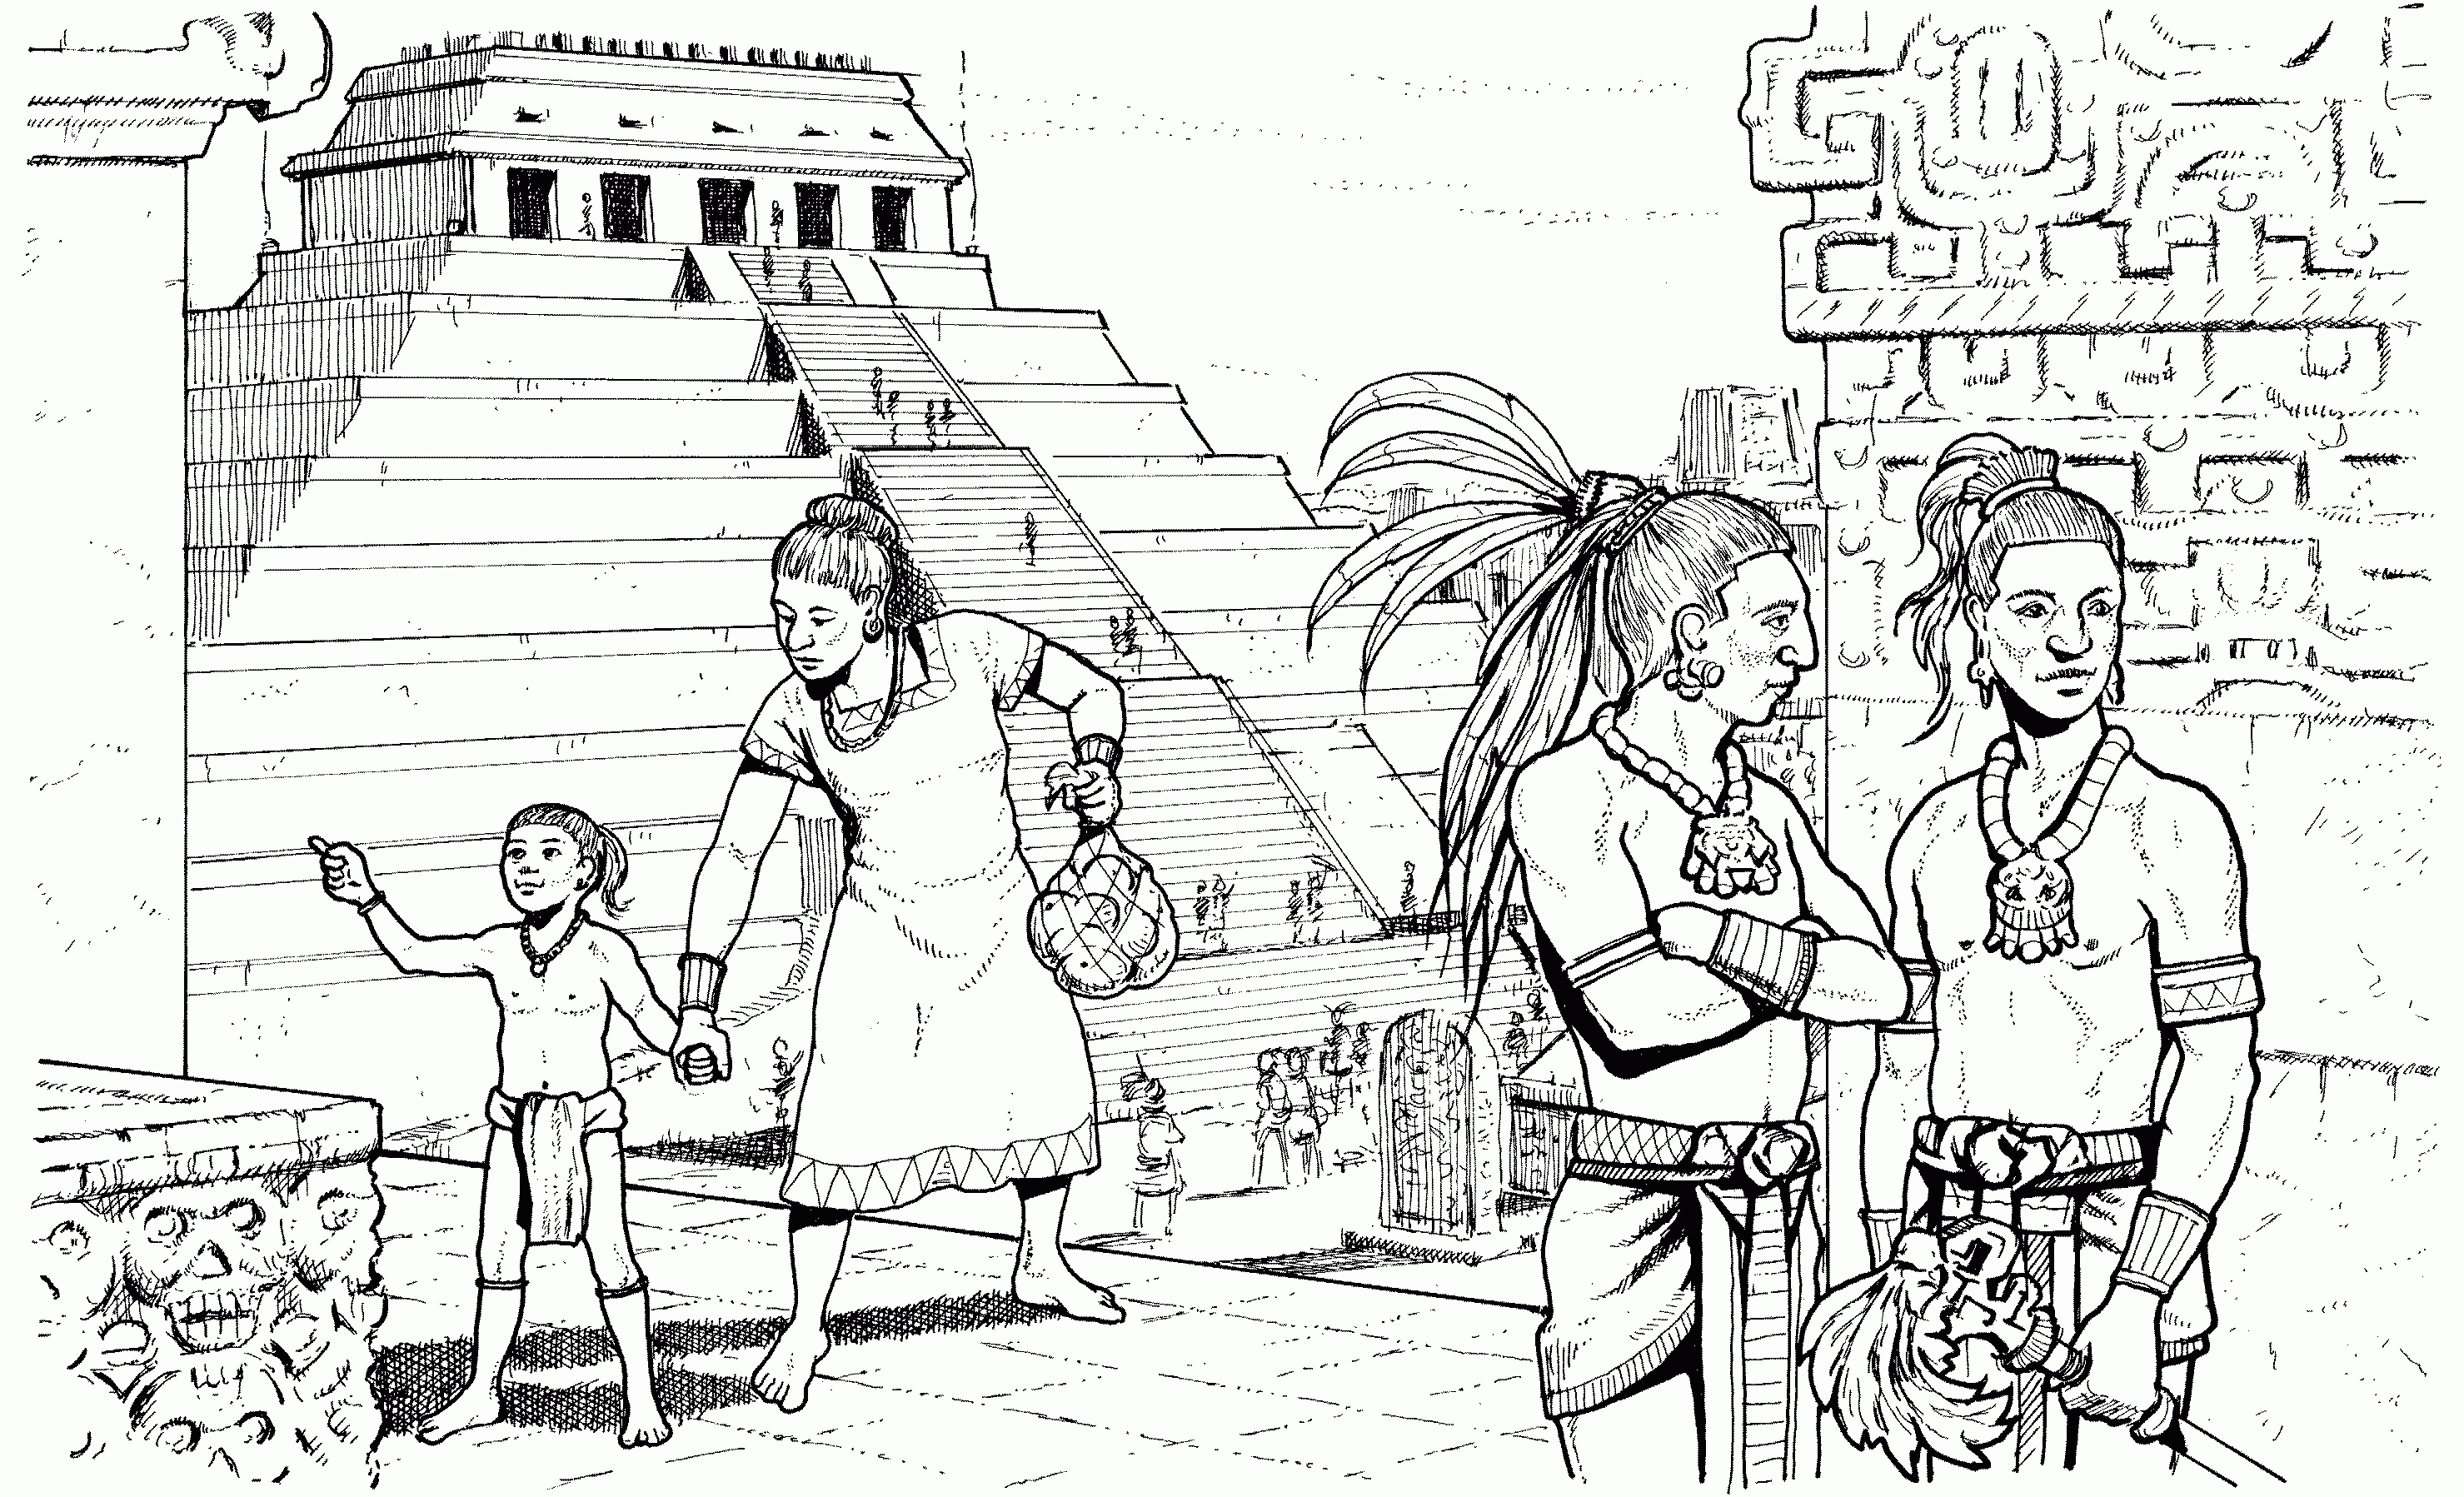 Mayan Calendar Coloring Page | Marjorie Barrick Museum